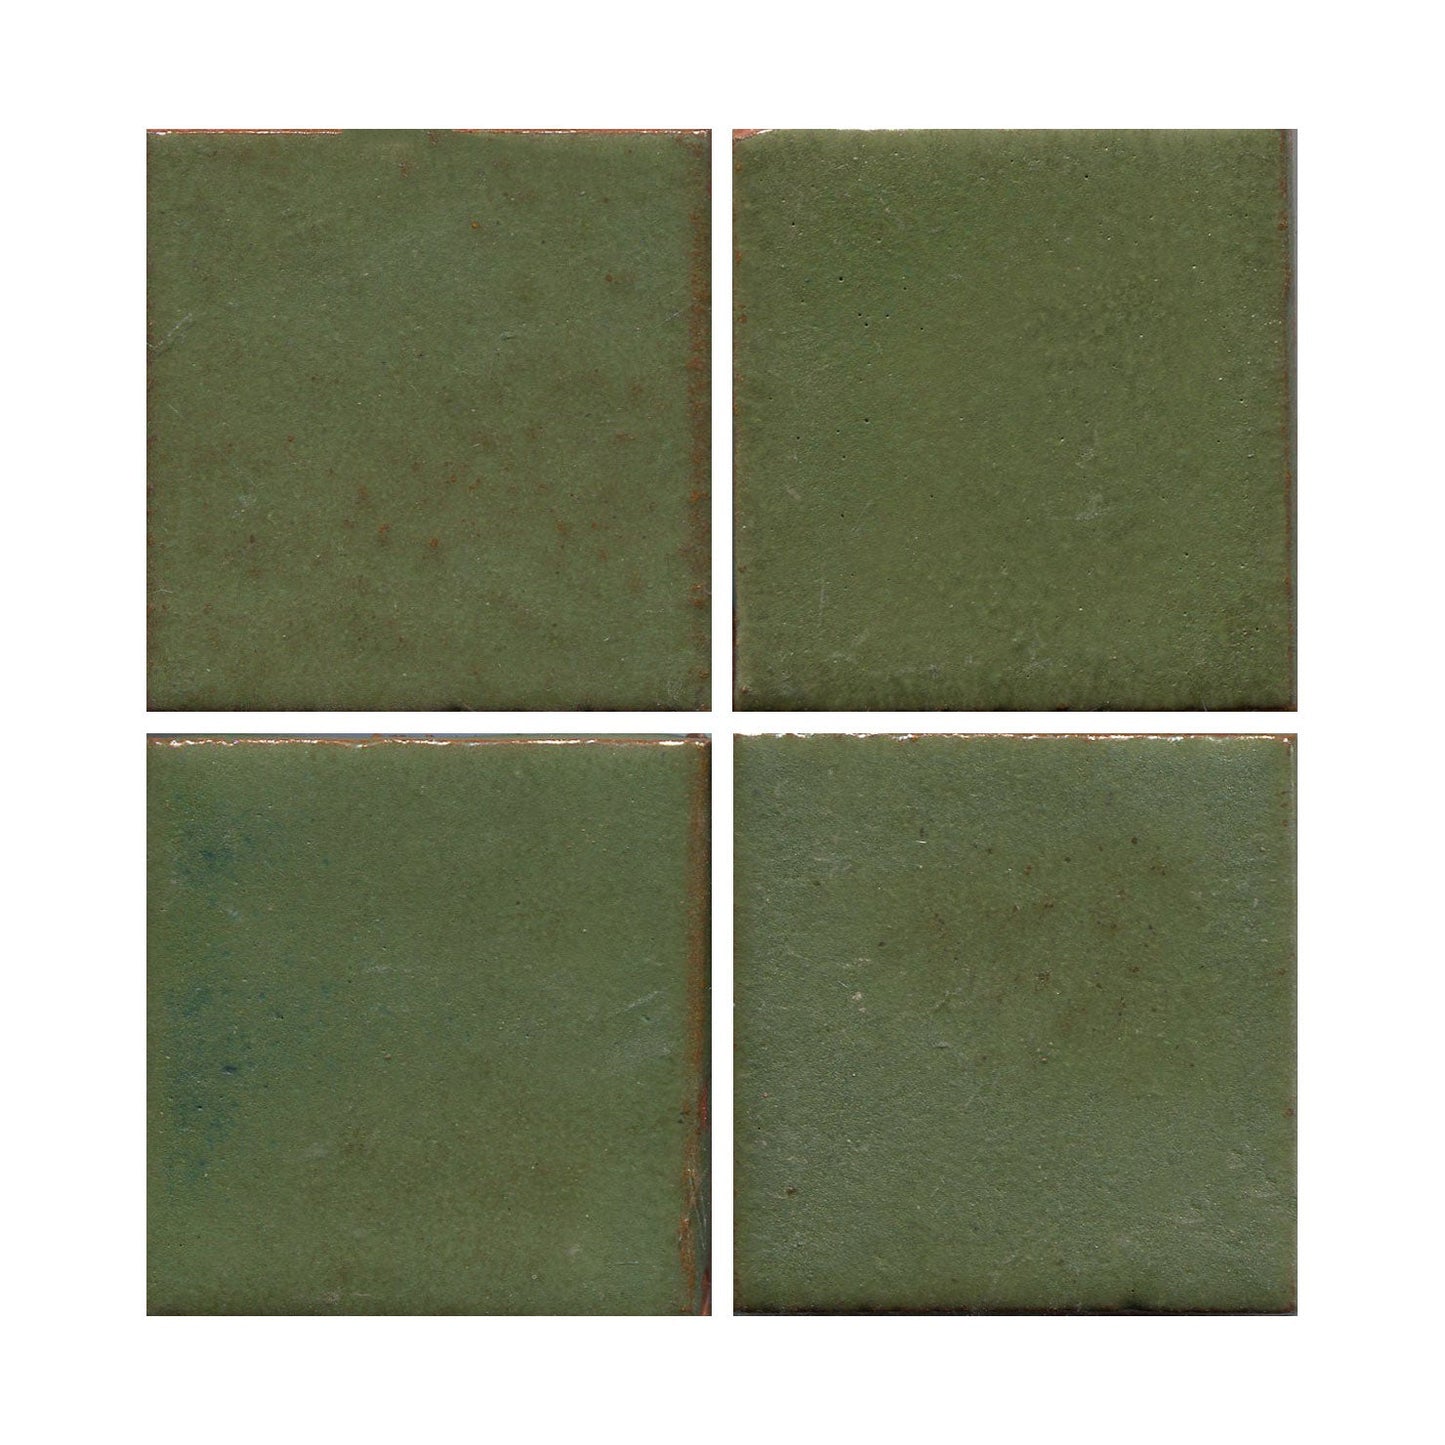 Pesto green 4x4  field tile